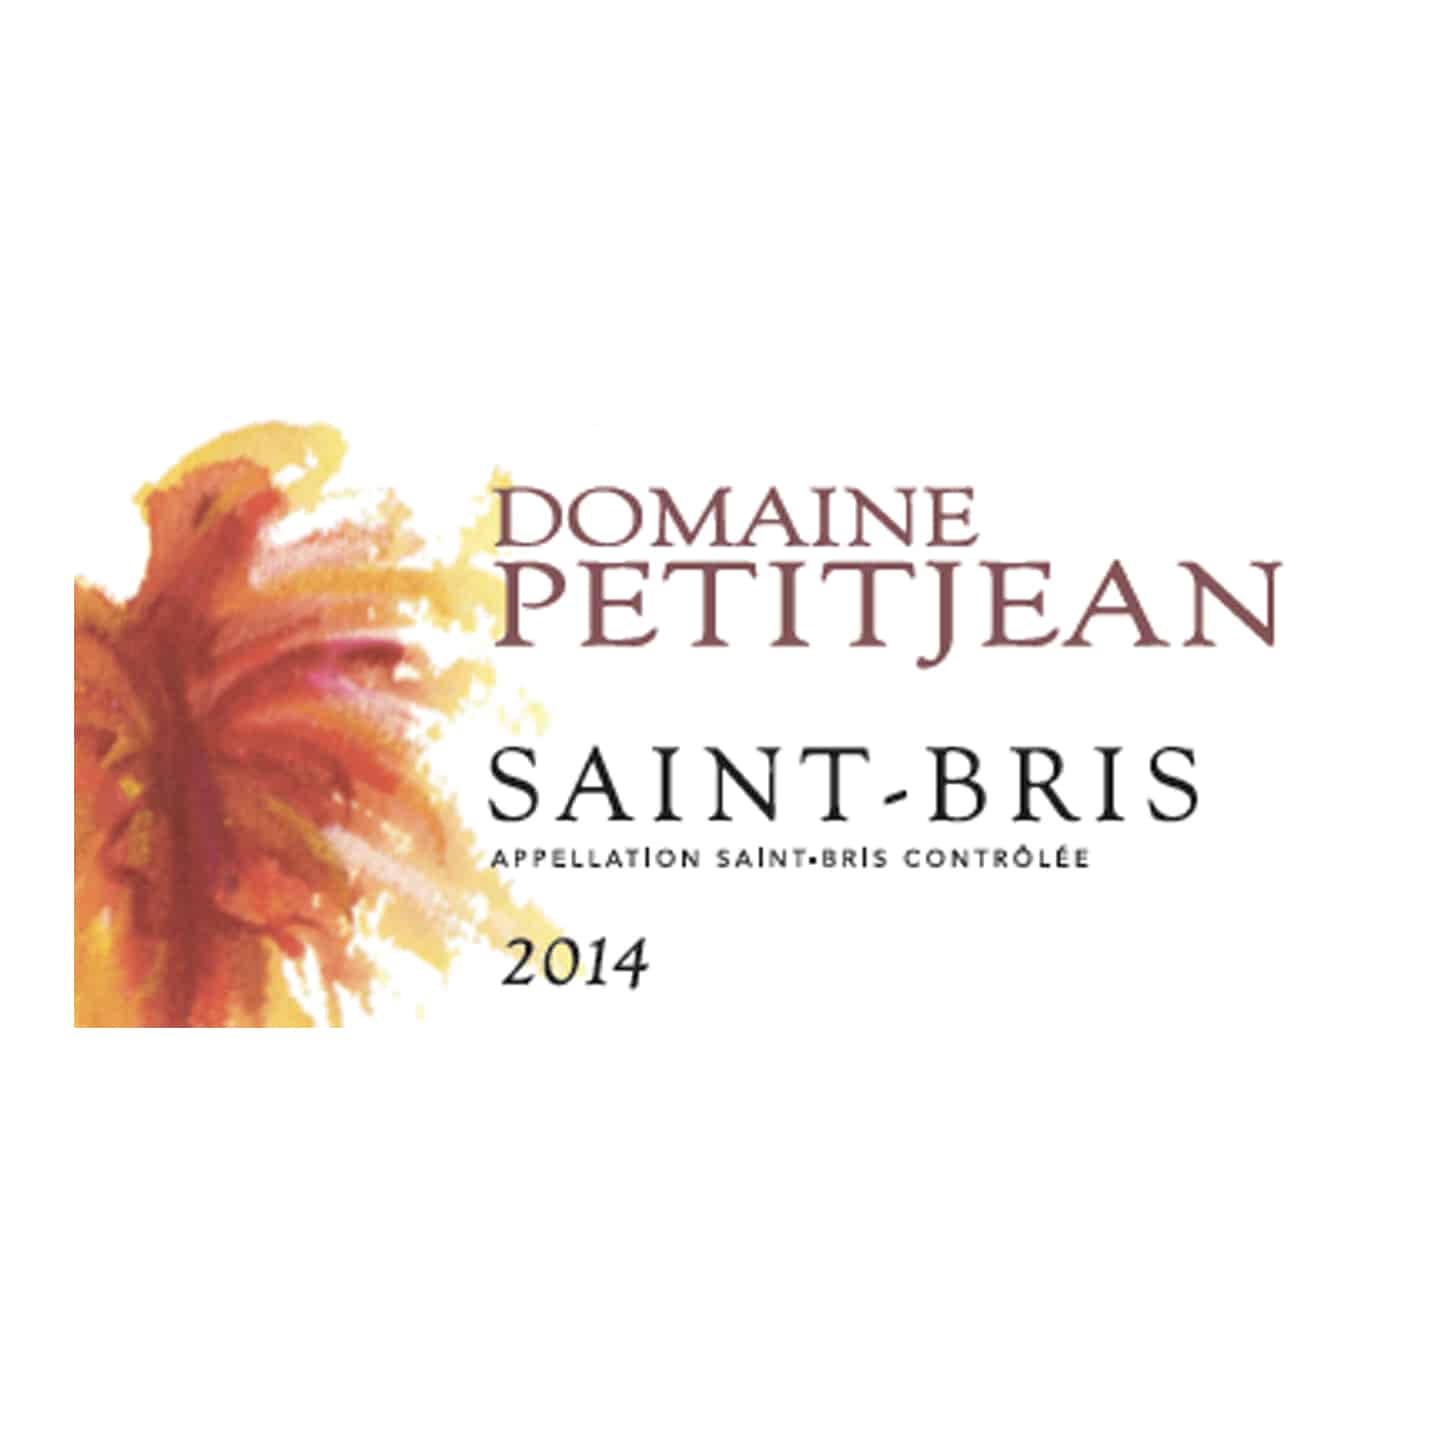 Domaine Petitjean SAINT BRIS 2014